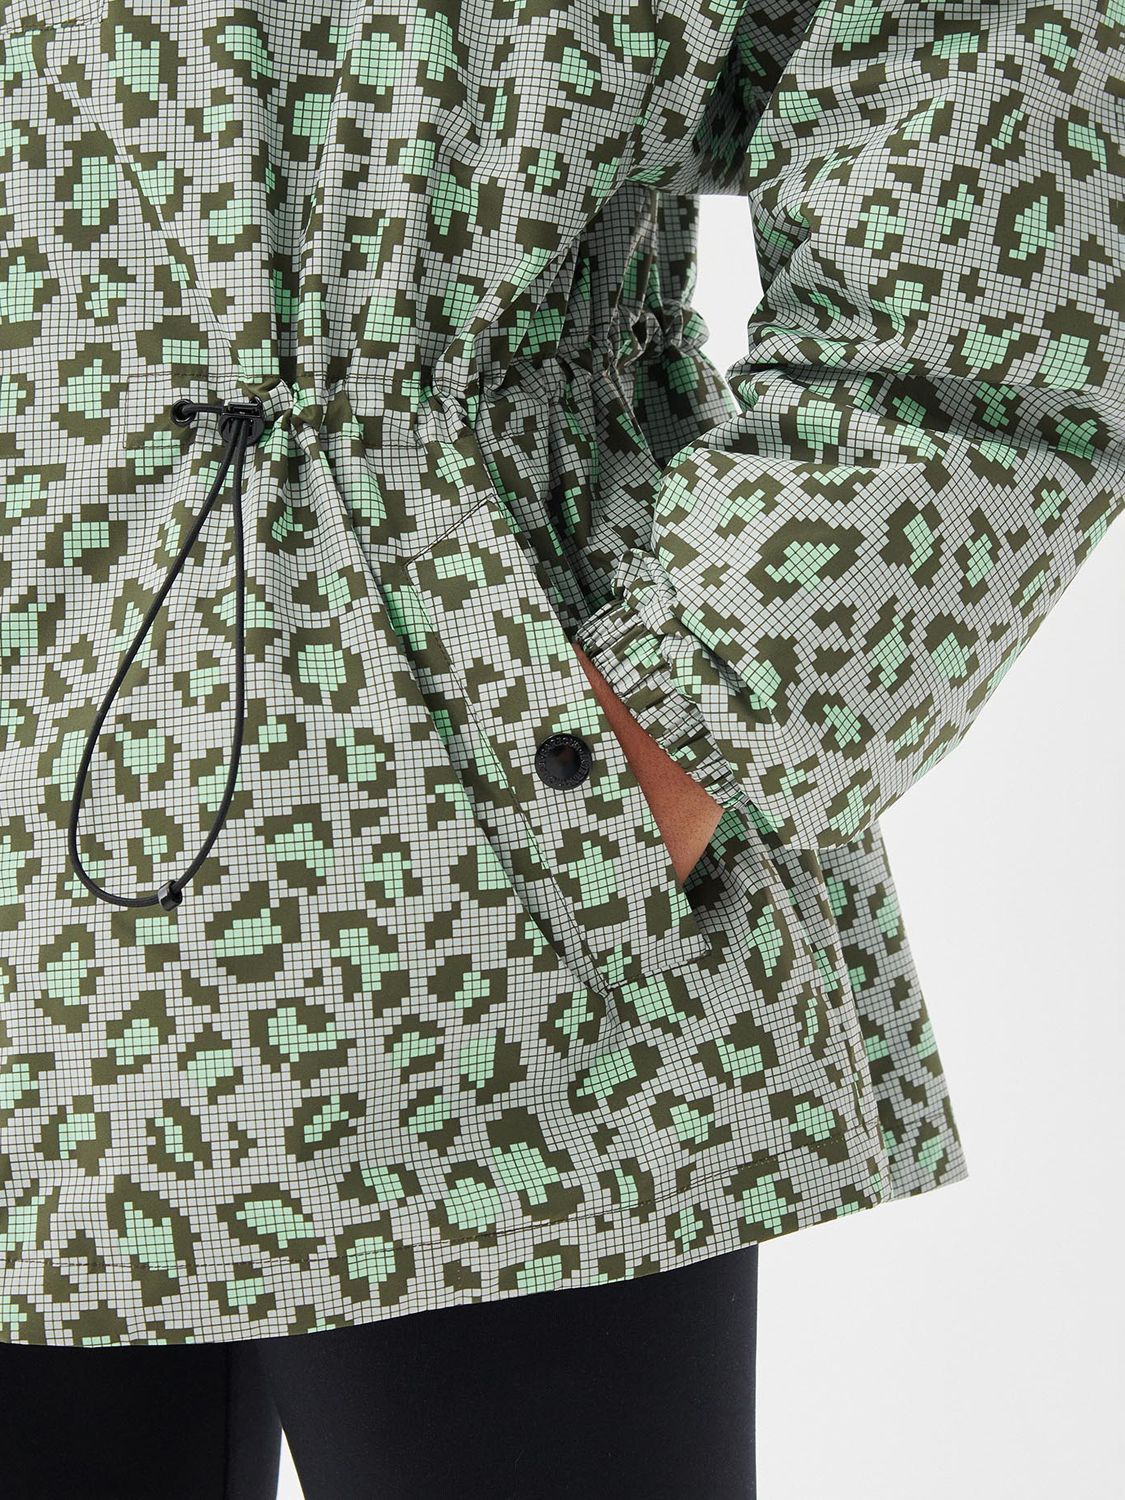 olive barbour jacket, louis vuitton neverfull, leopard print